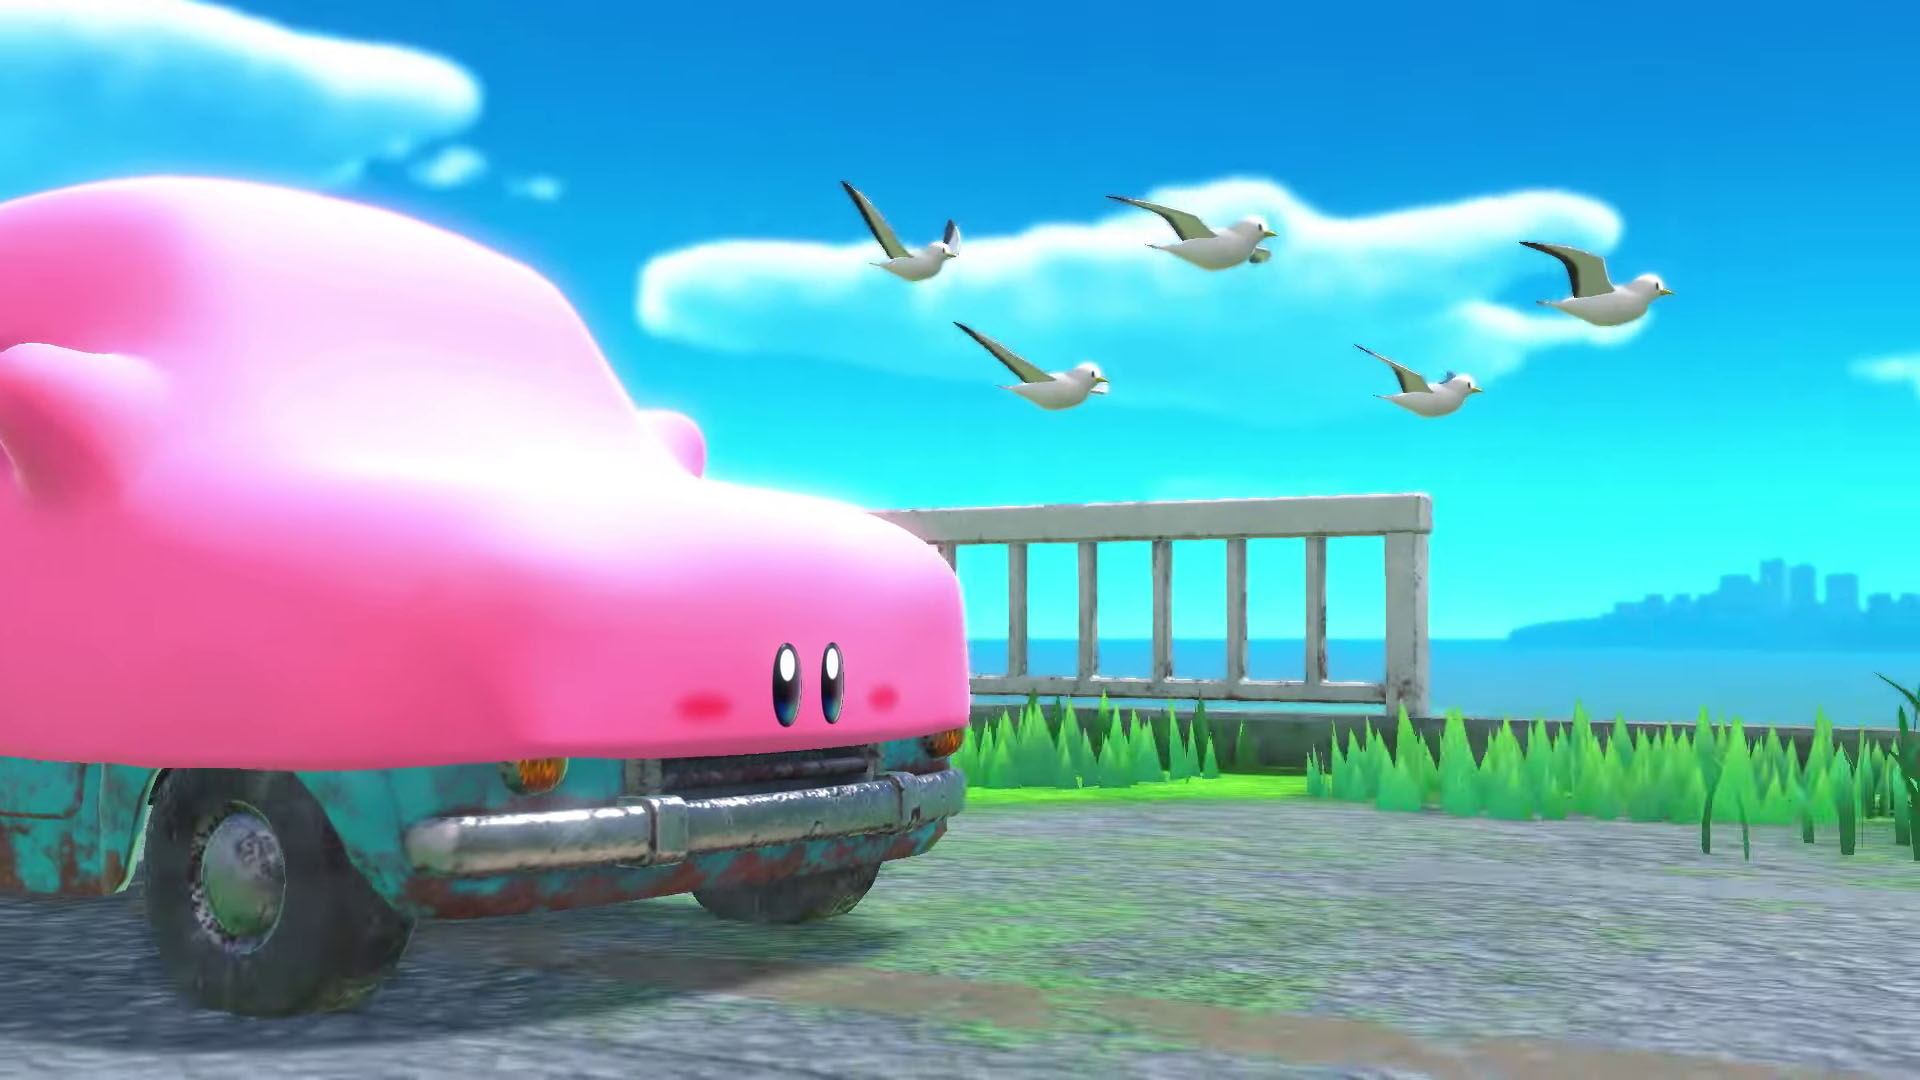 Kirby And Thre Forgotten Land recebe trailer e demo já está disponível